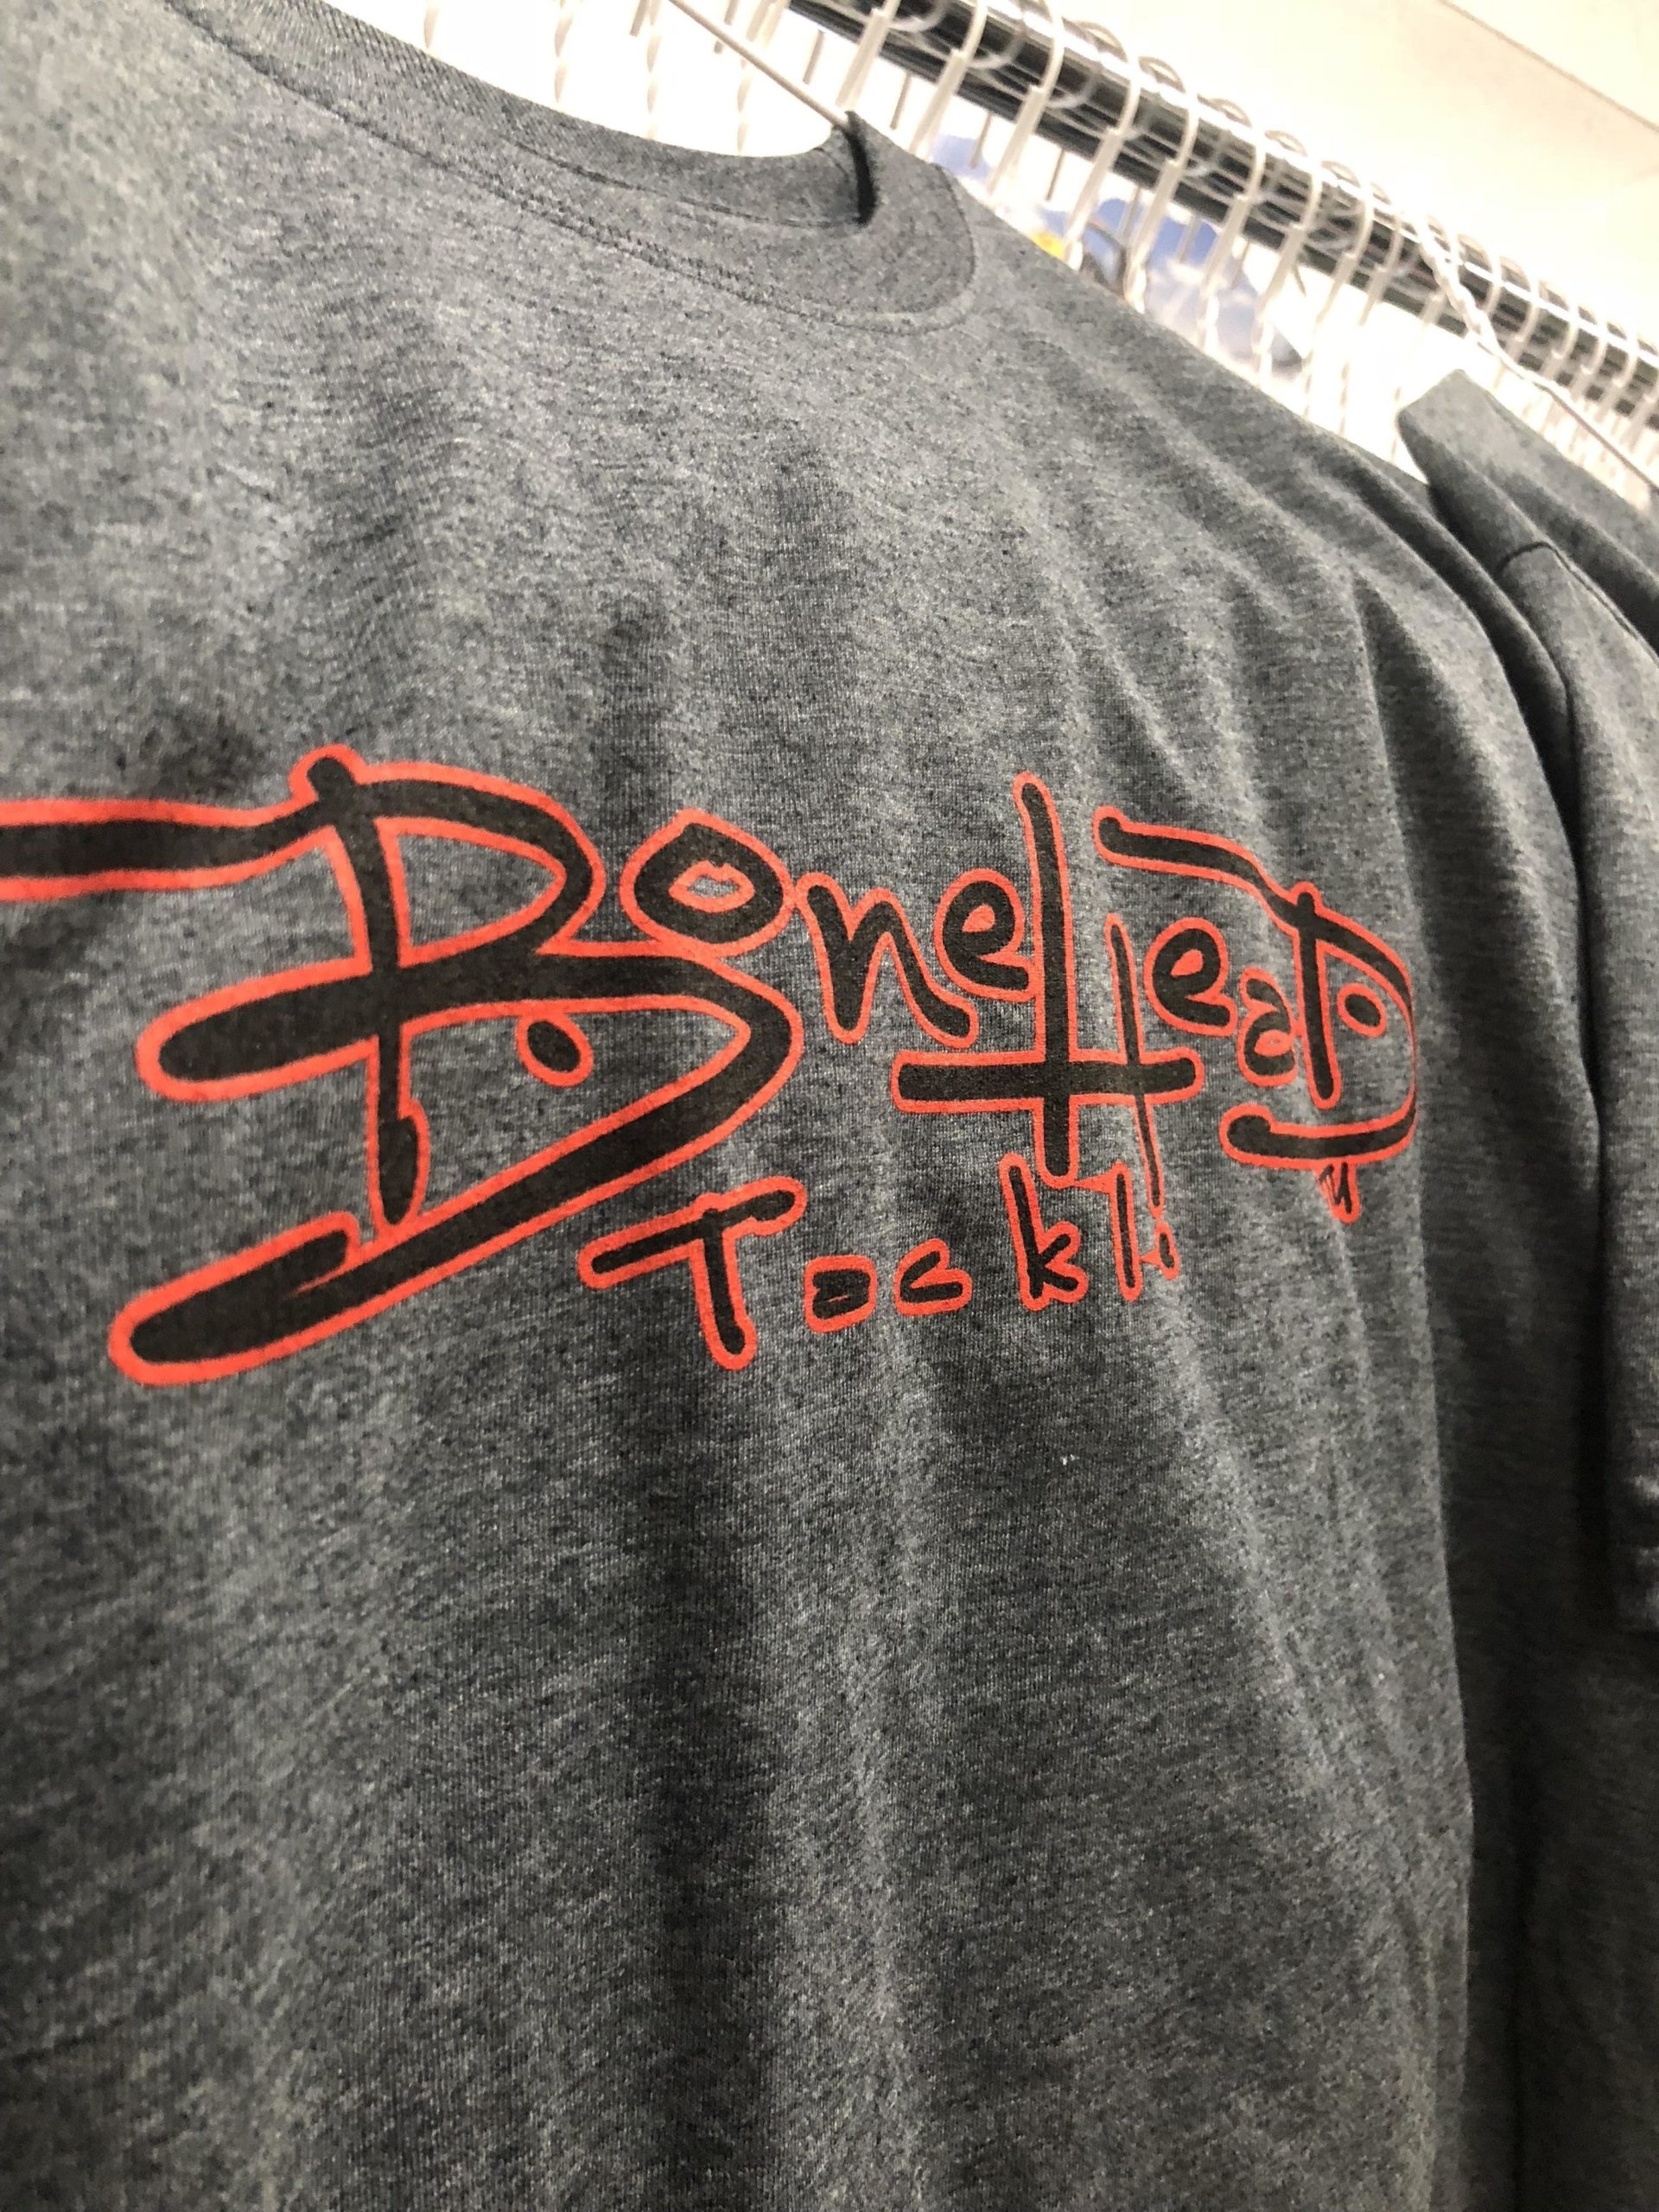 Bonehead Tackle T-Shirt